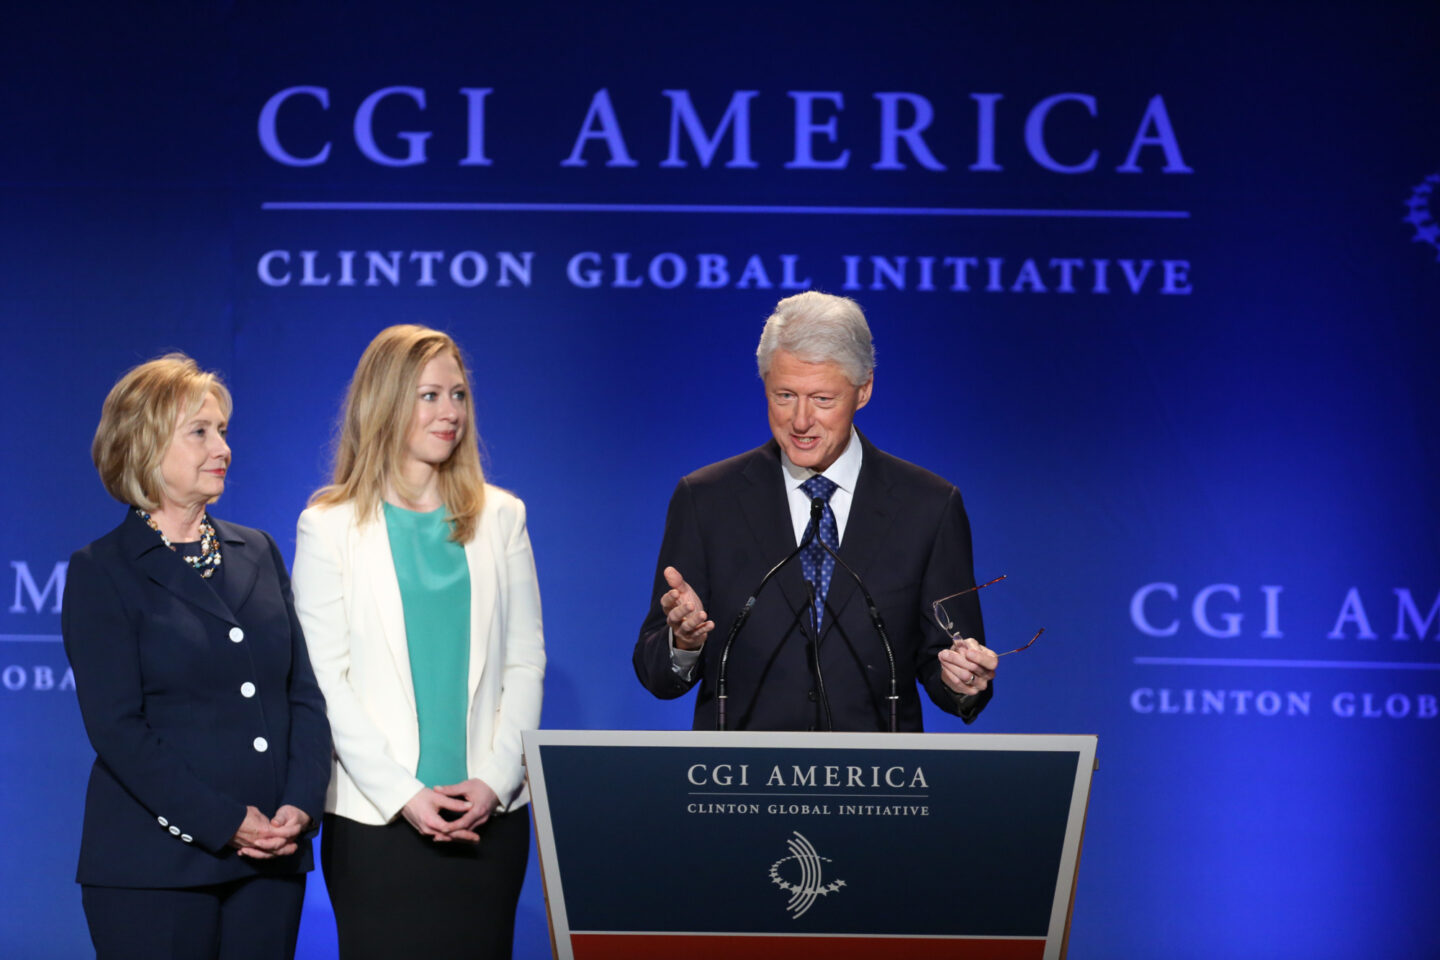 President Clinton, Secretary Clinton, and Chelsea Clinton speak onstage at CGI America